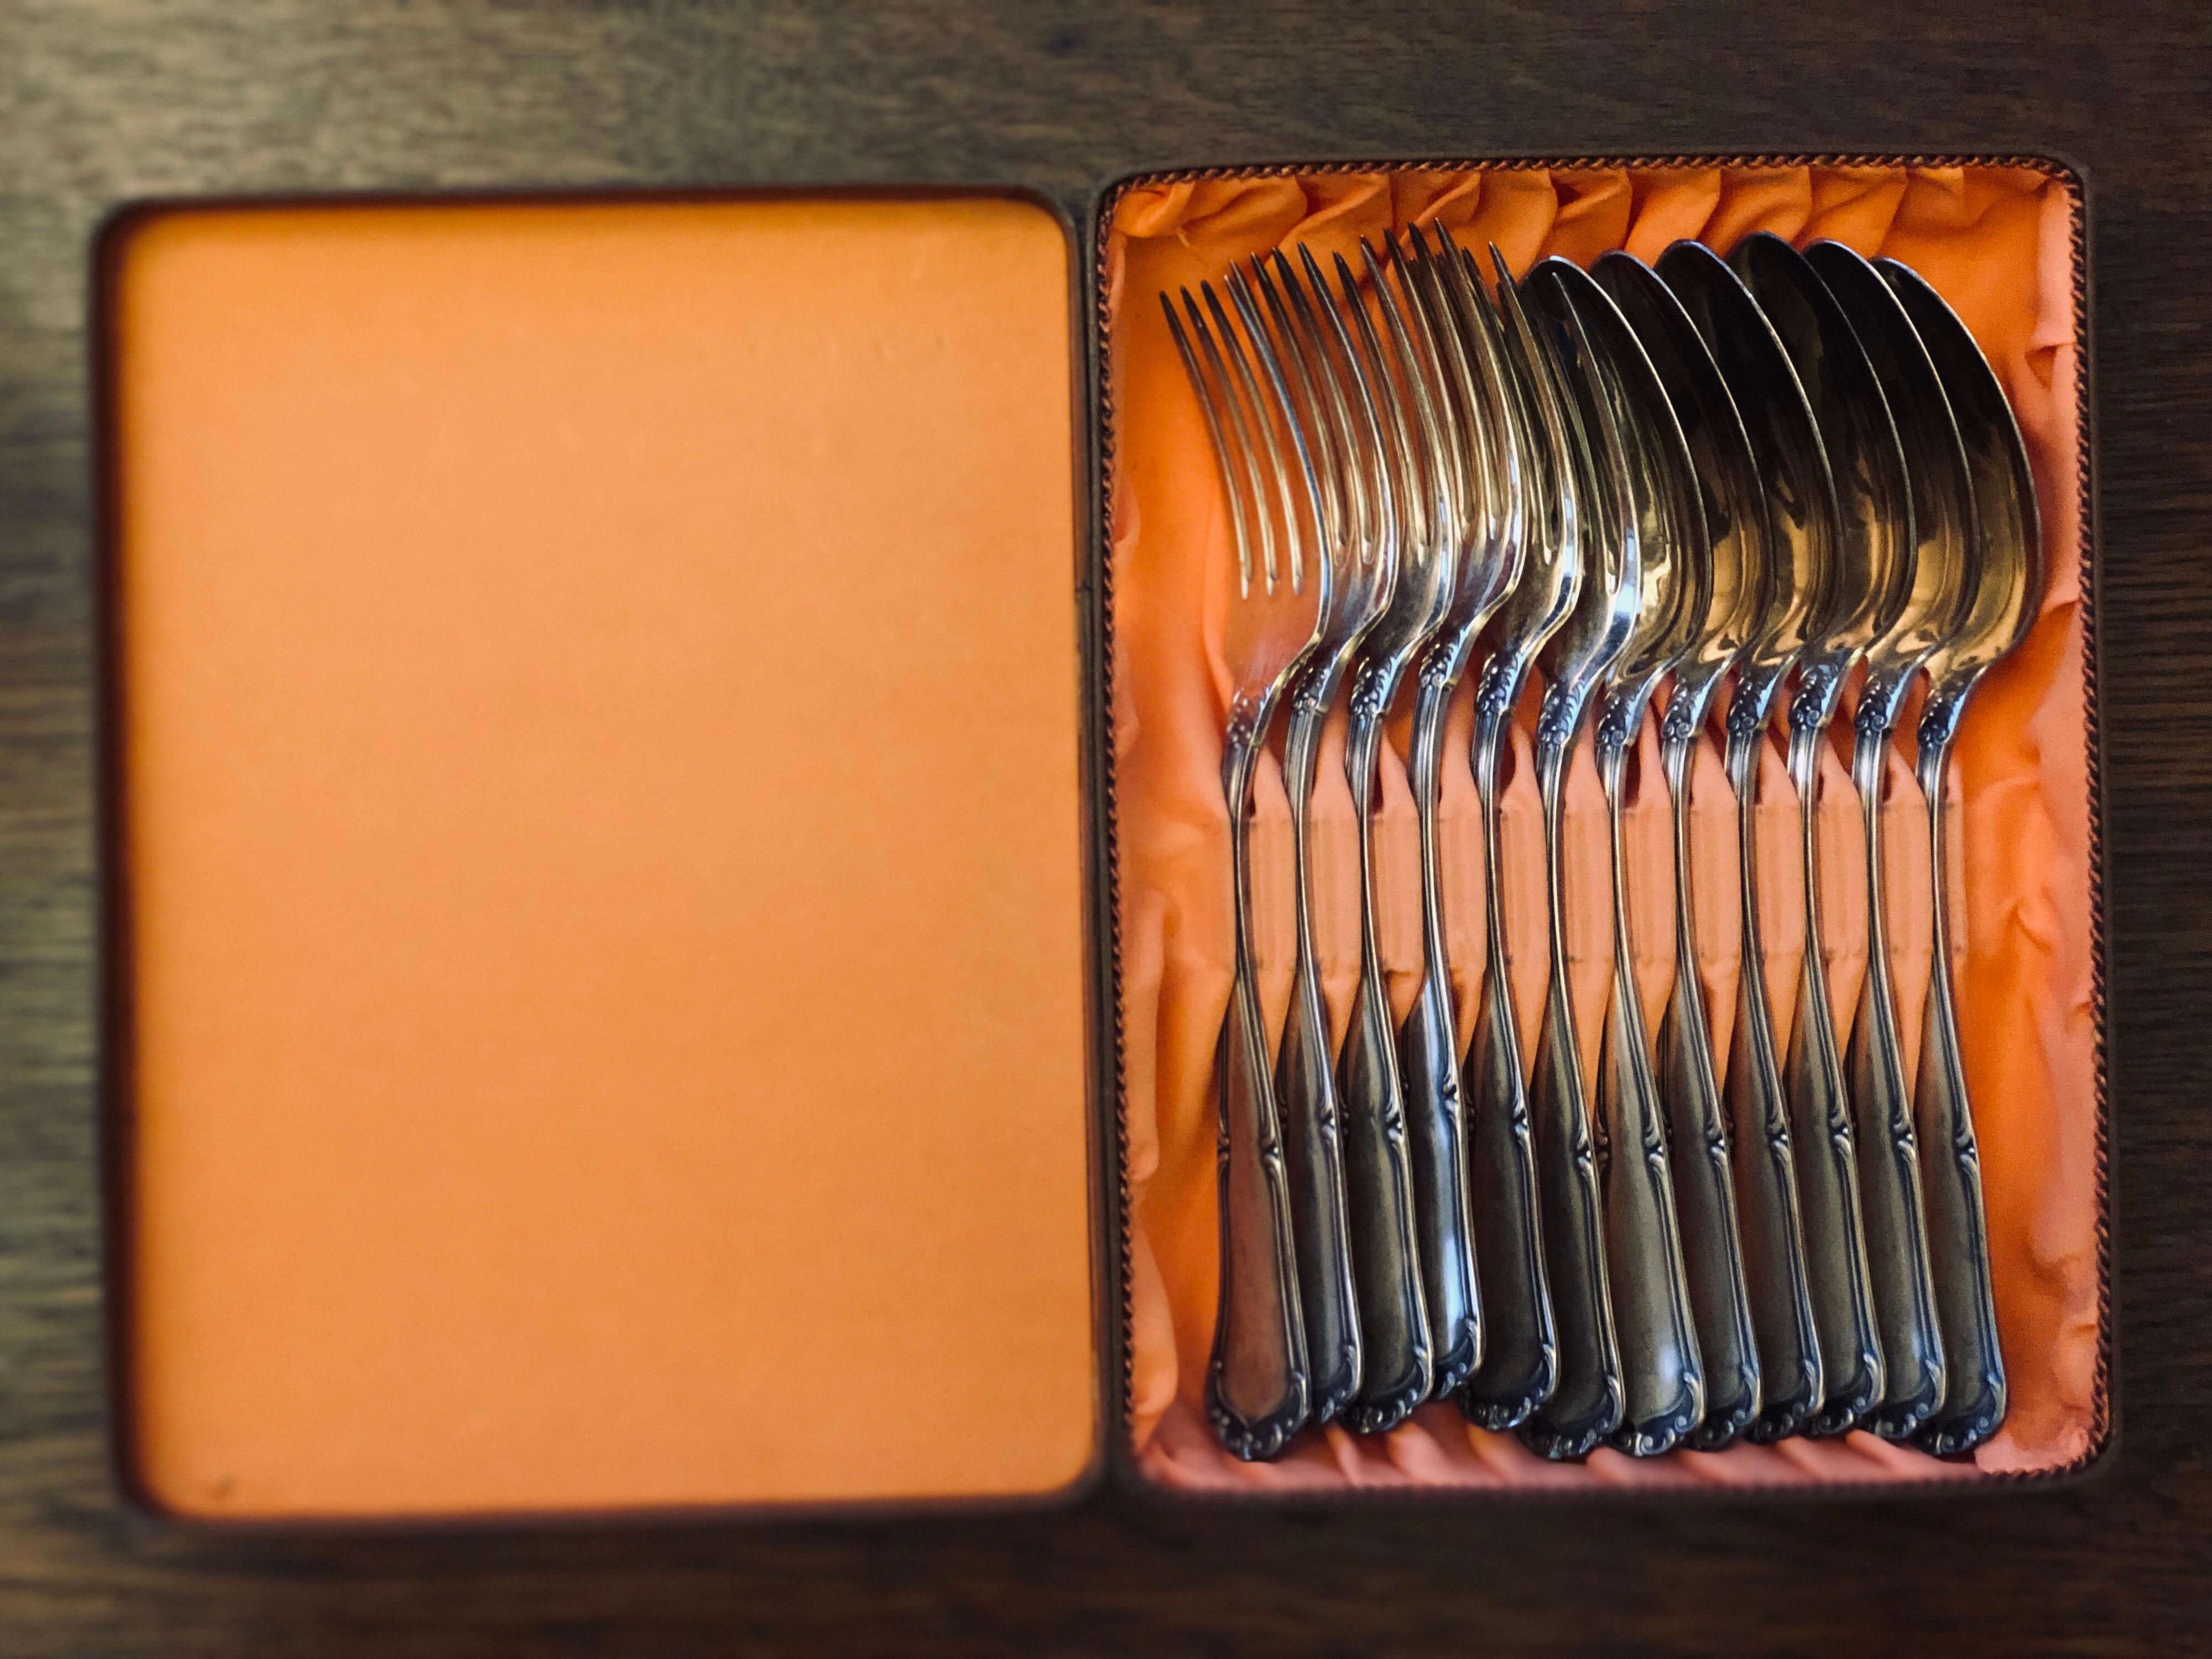 E.Icherrer Messerschmied Bulach Flatware Silver Set of 12 Spoons Forks in a Box 4